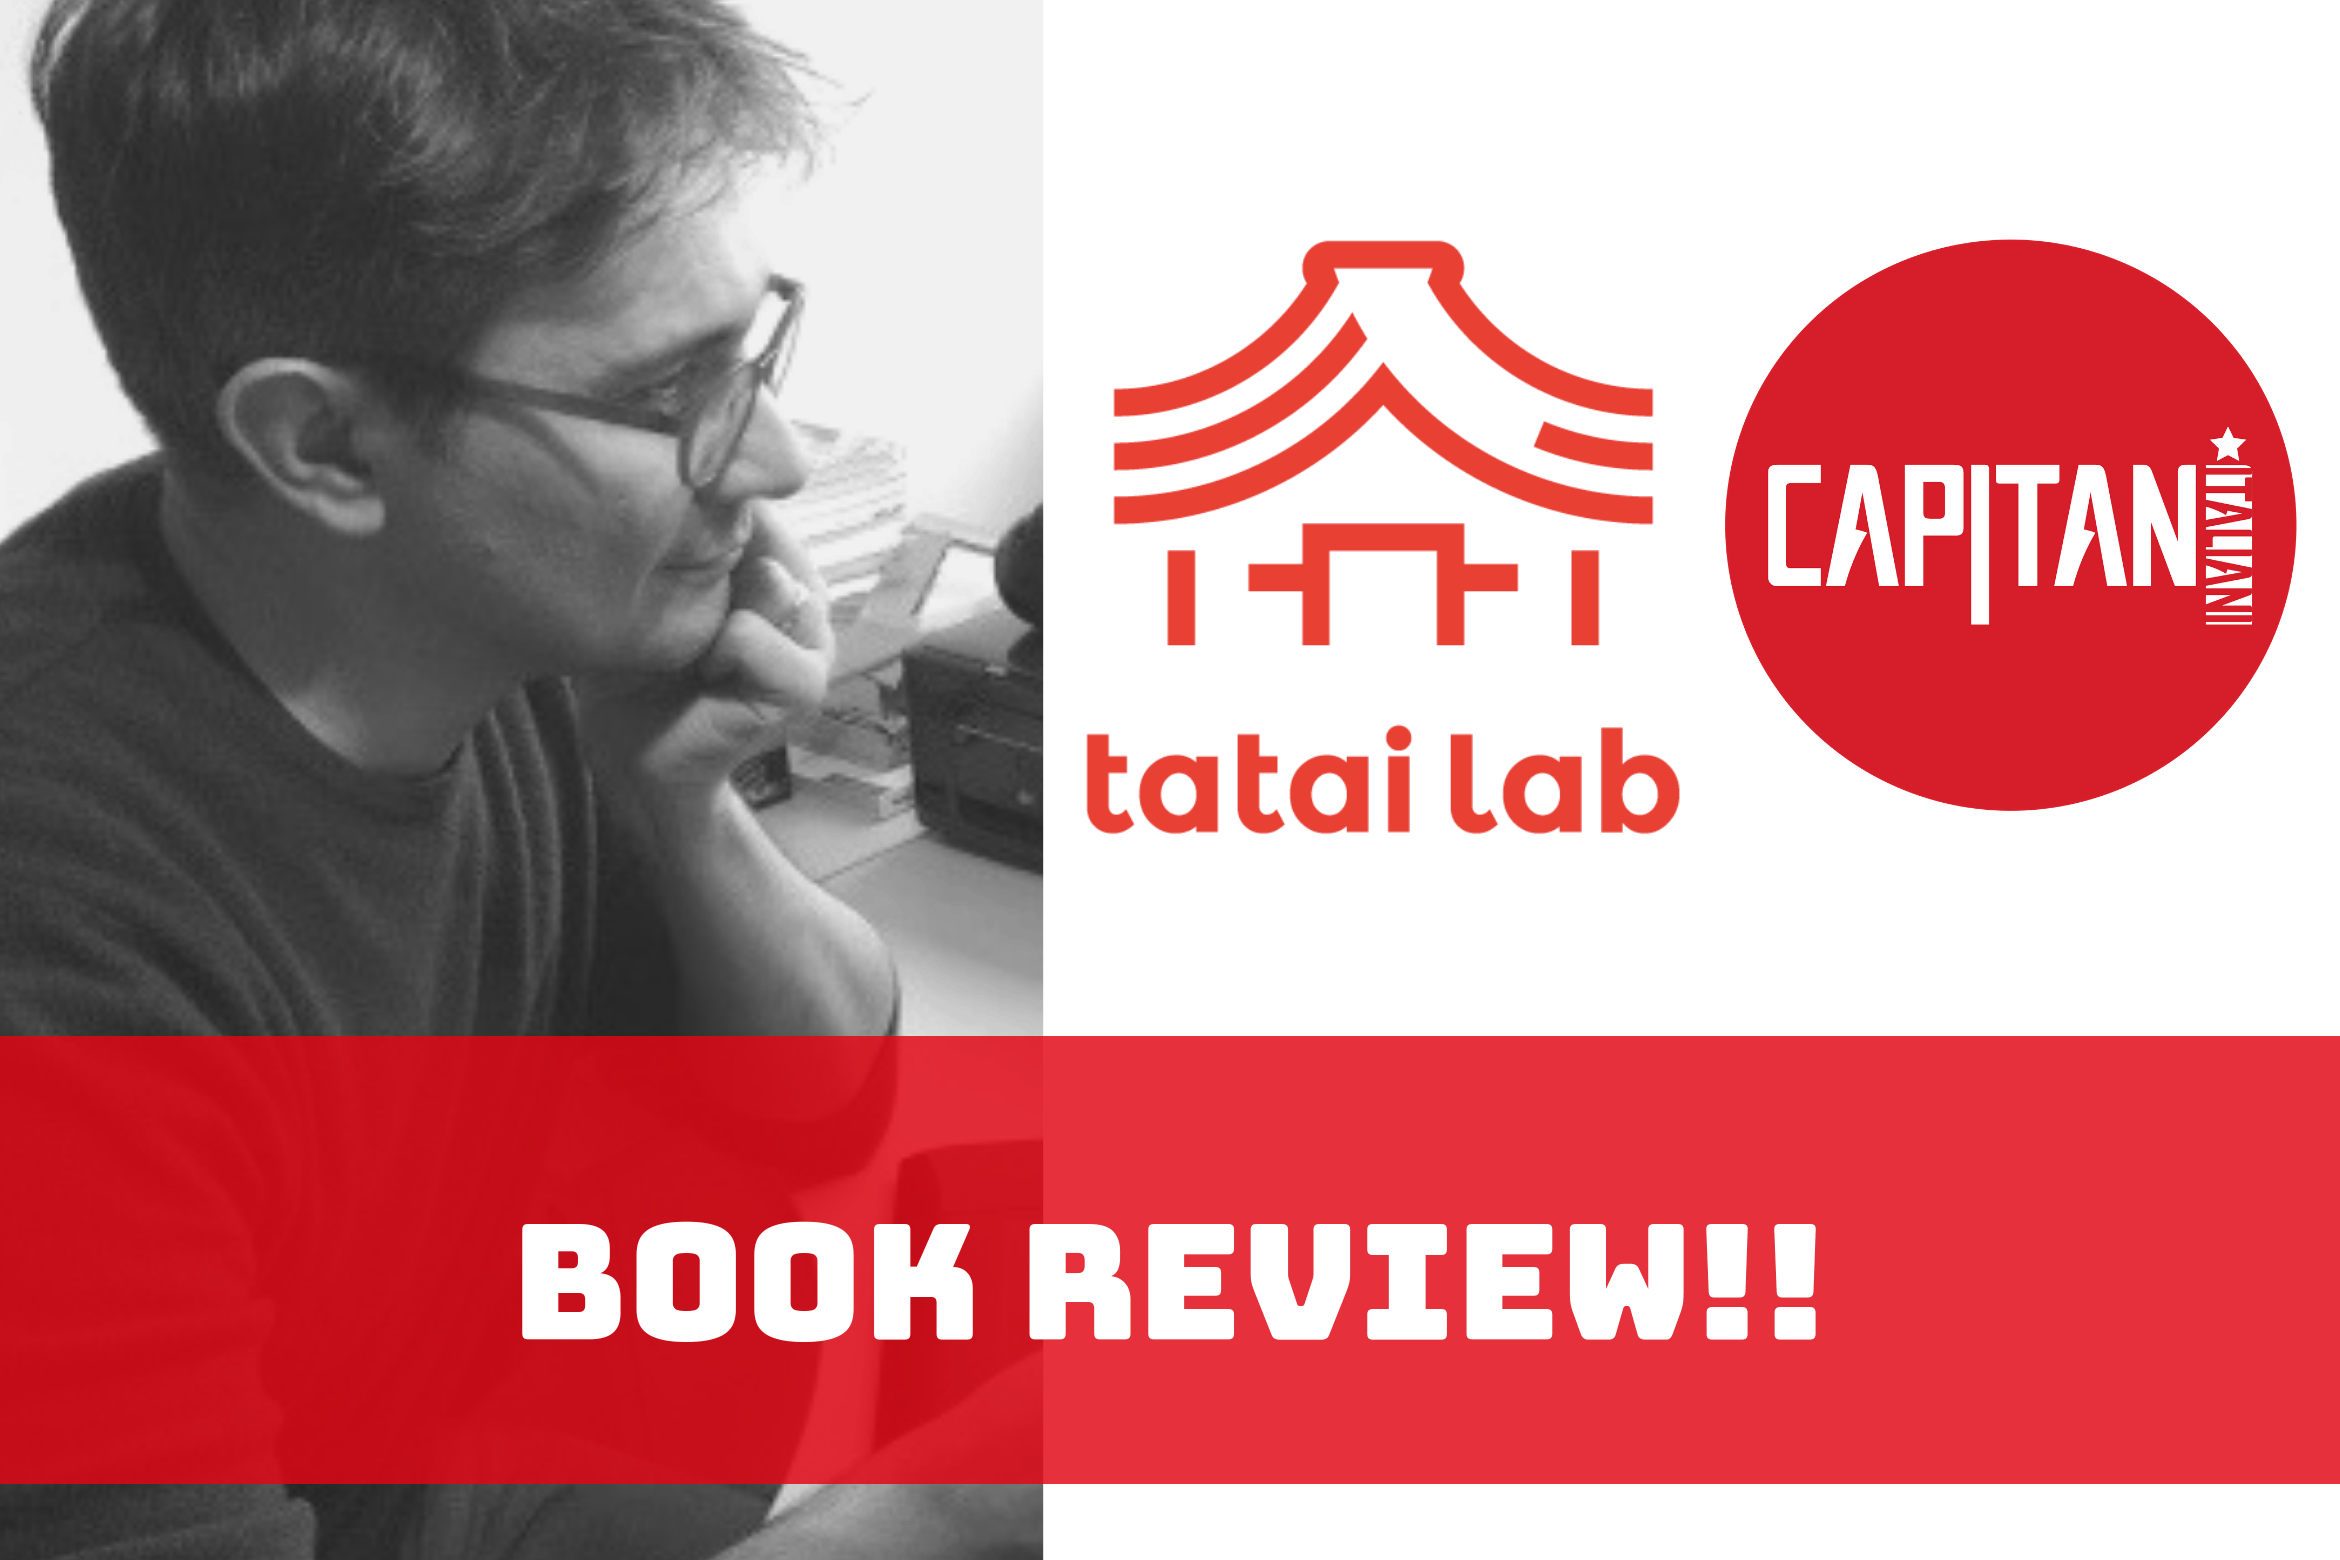 Book Review con Tatai Lab, Massimo Dall’Oglio e Capitani Italiani!